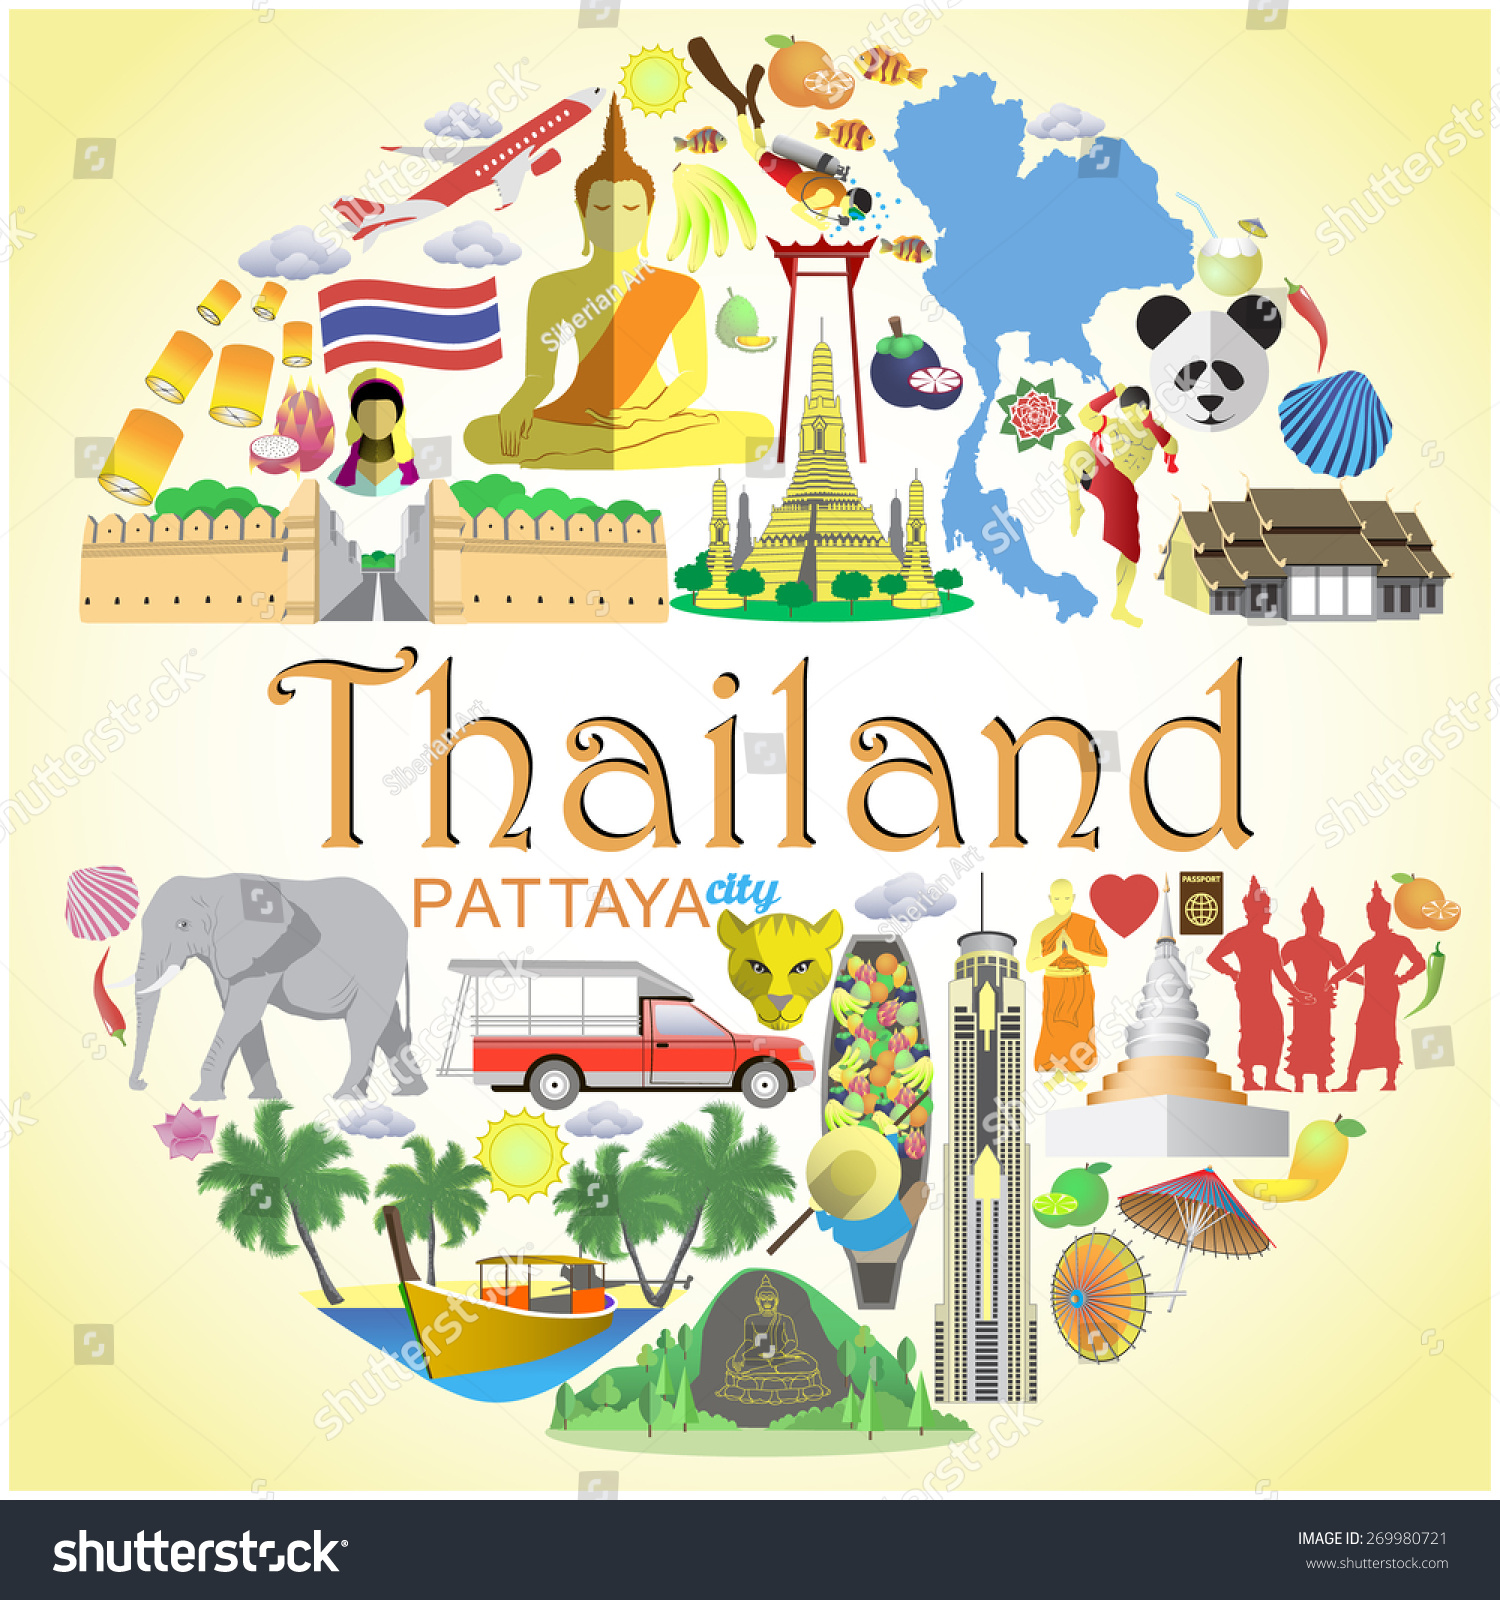 clipart thailand map - photo #35